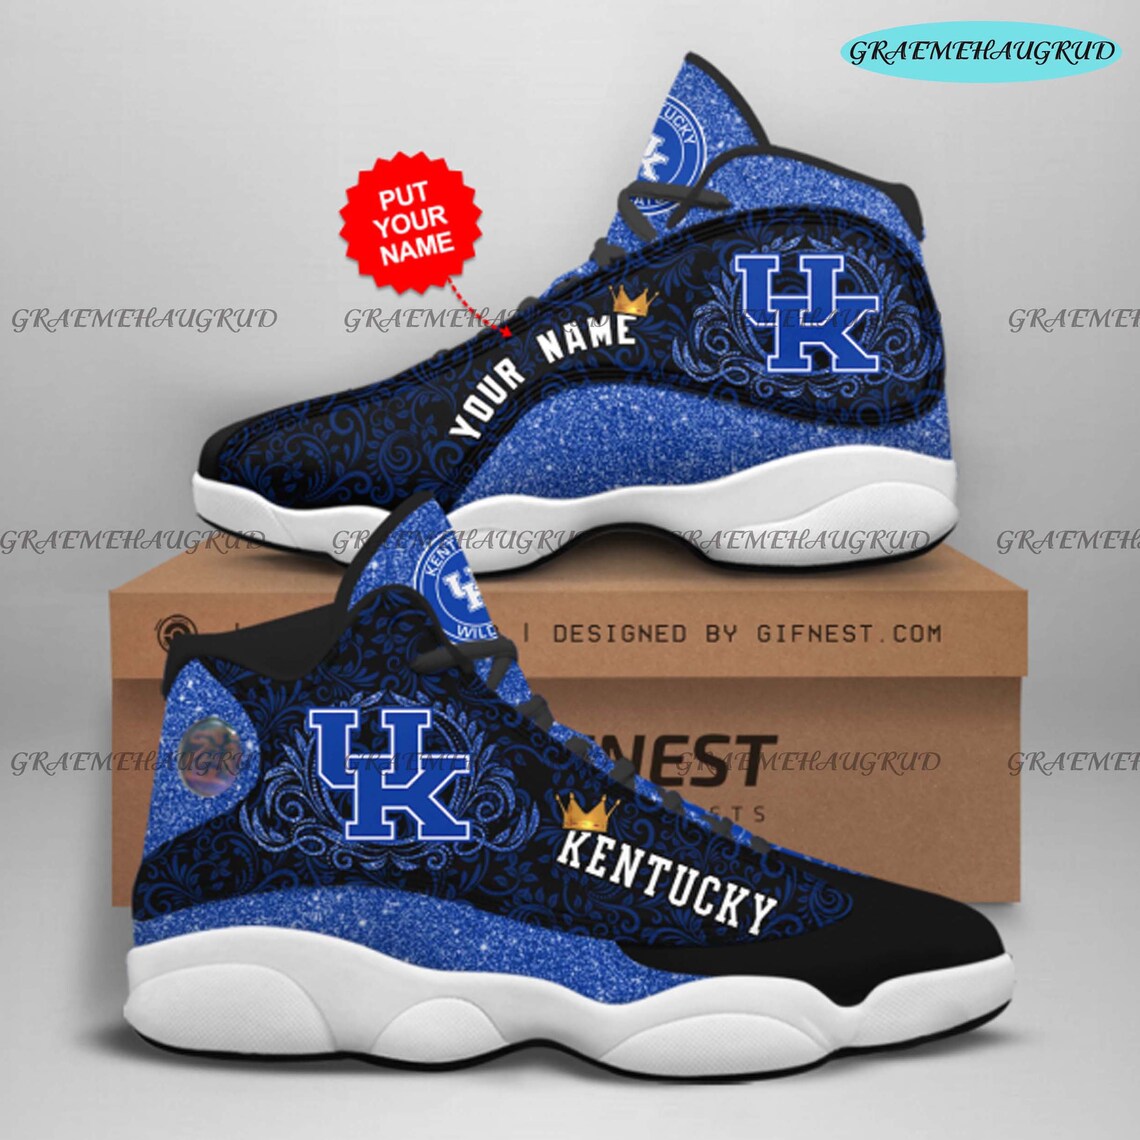 Kentucky Wildcats Air Jordan 13 Basketball Shoes AJ13 Low help | Etsy